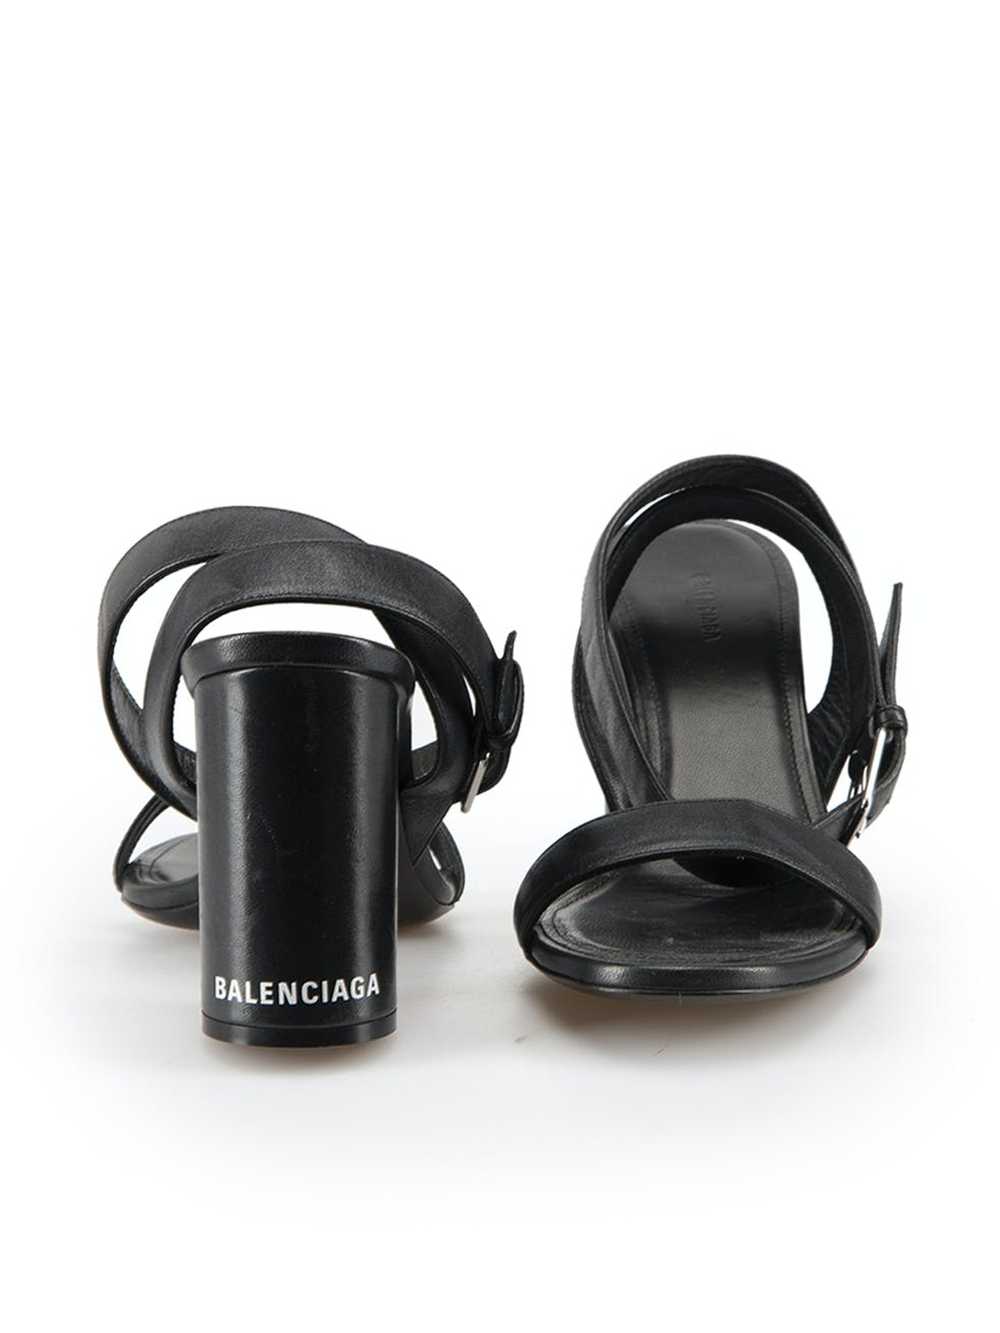 Balenciaga Black Leather Strappy Mid Heel Sandals - image 3